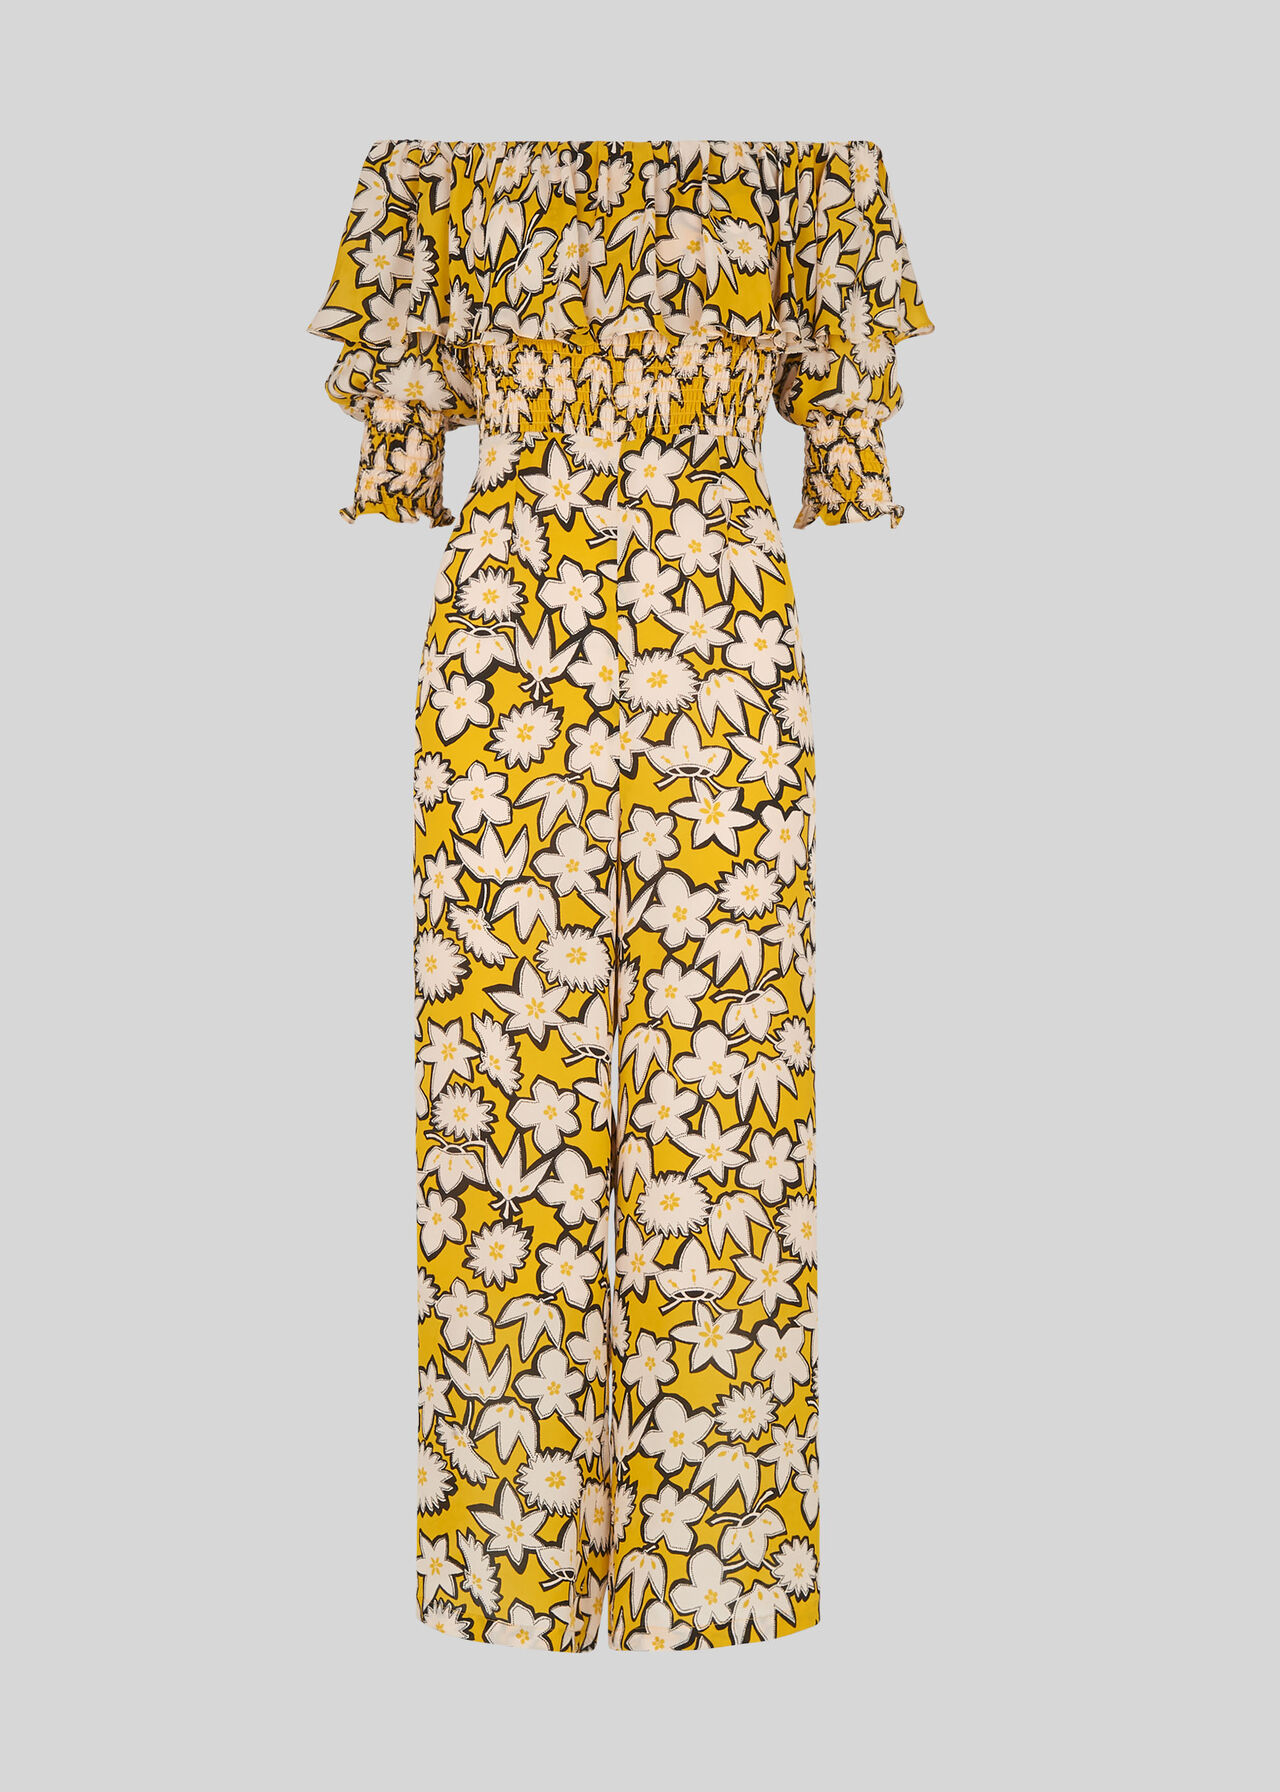 WHISTLES Ladies Rhea Print Silk Floral Jumpsuit Yellow Multi UK8 BNWT RRP299